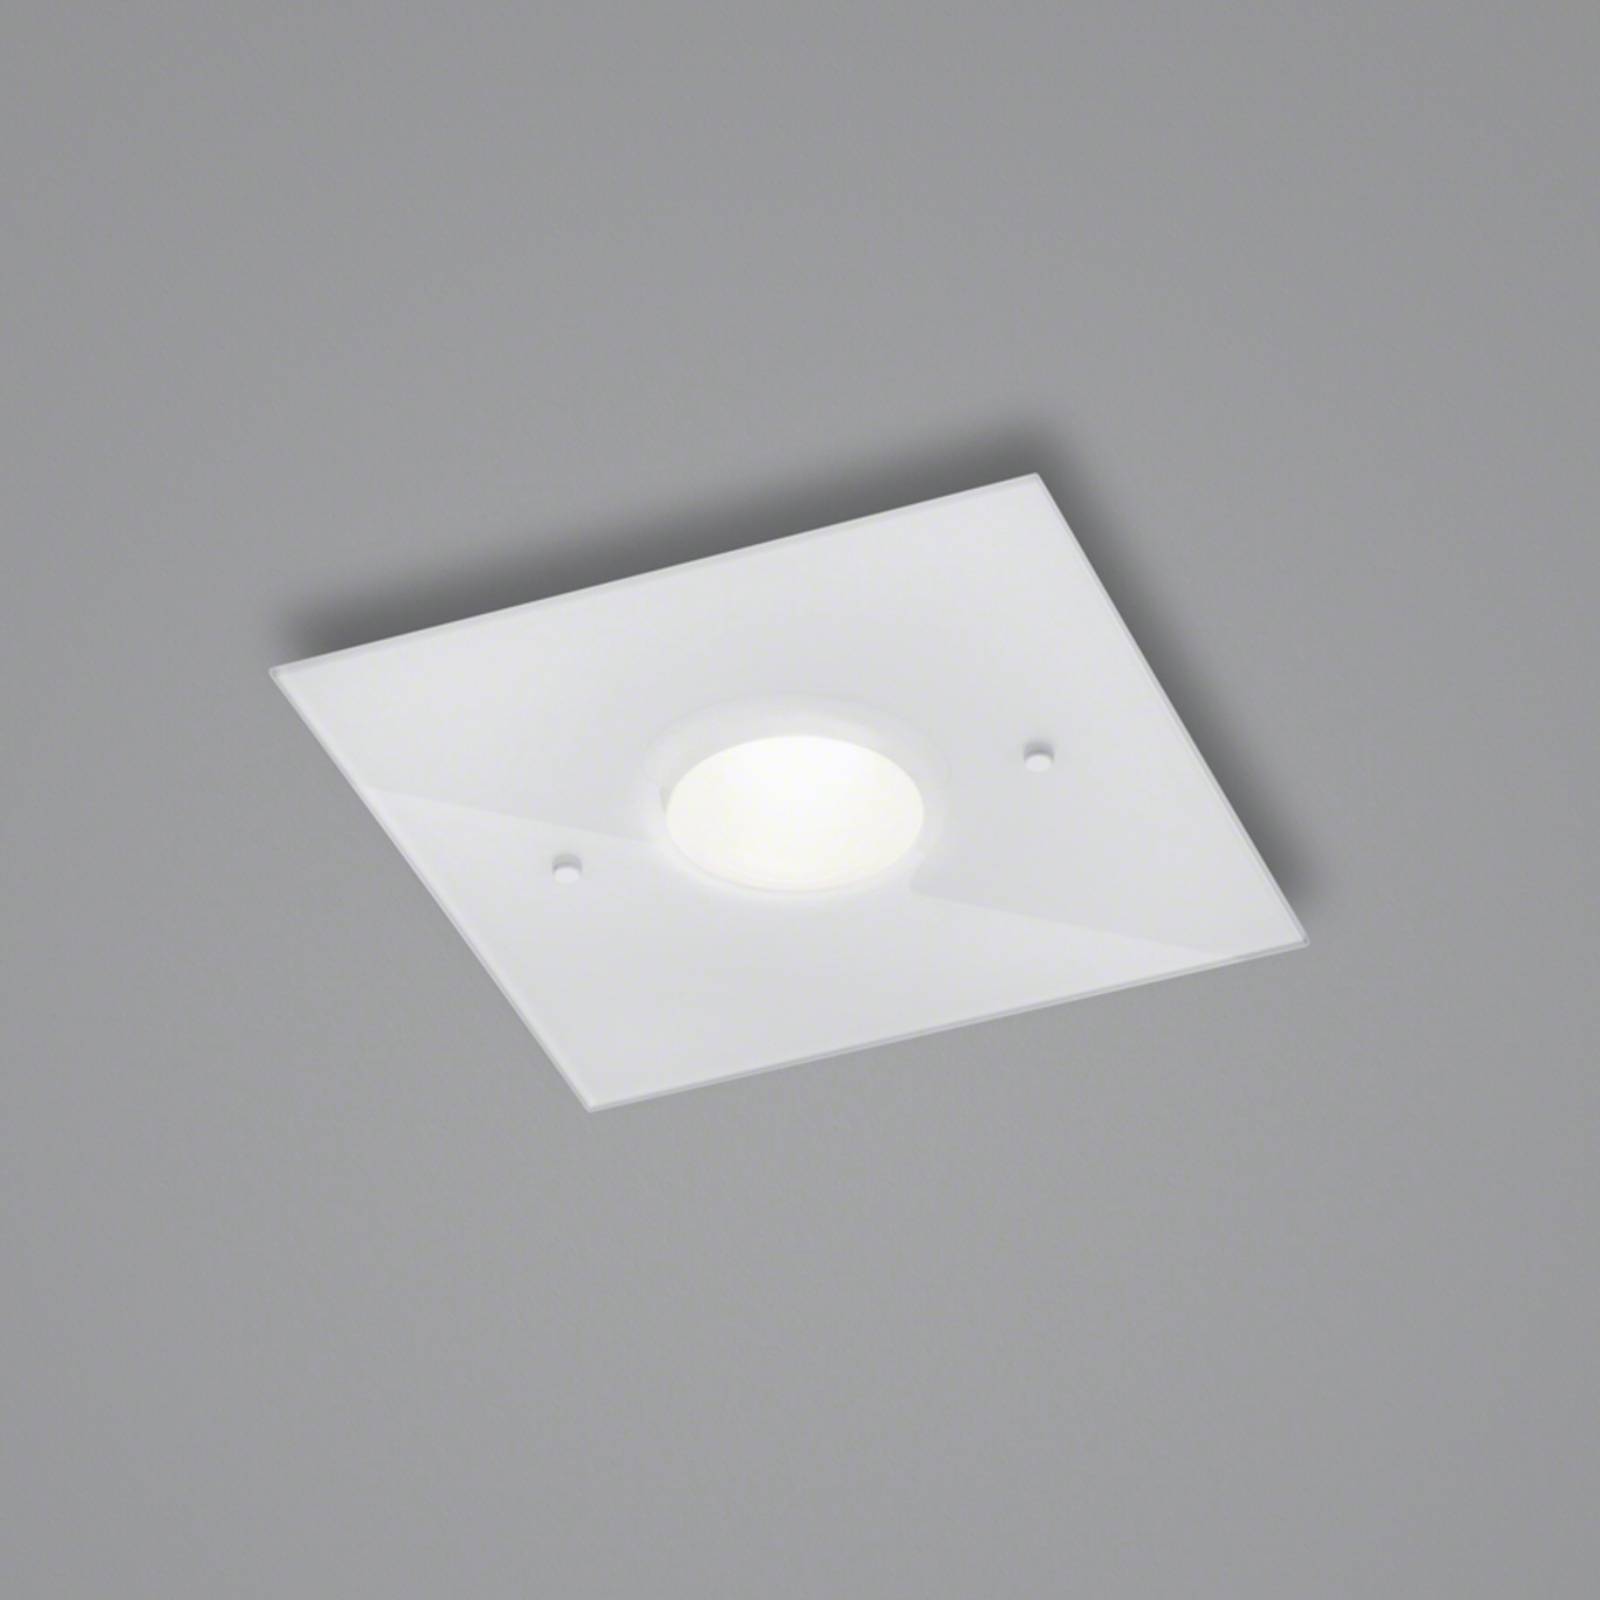 Helestra Nomi plafonnier LED 23x23 cm dim blanc